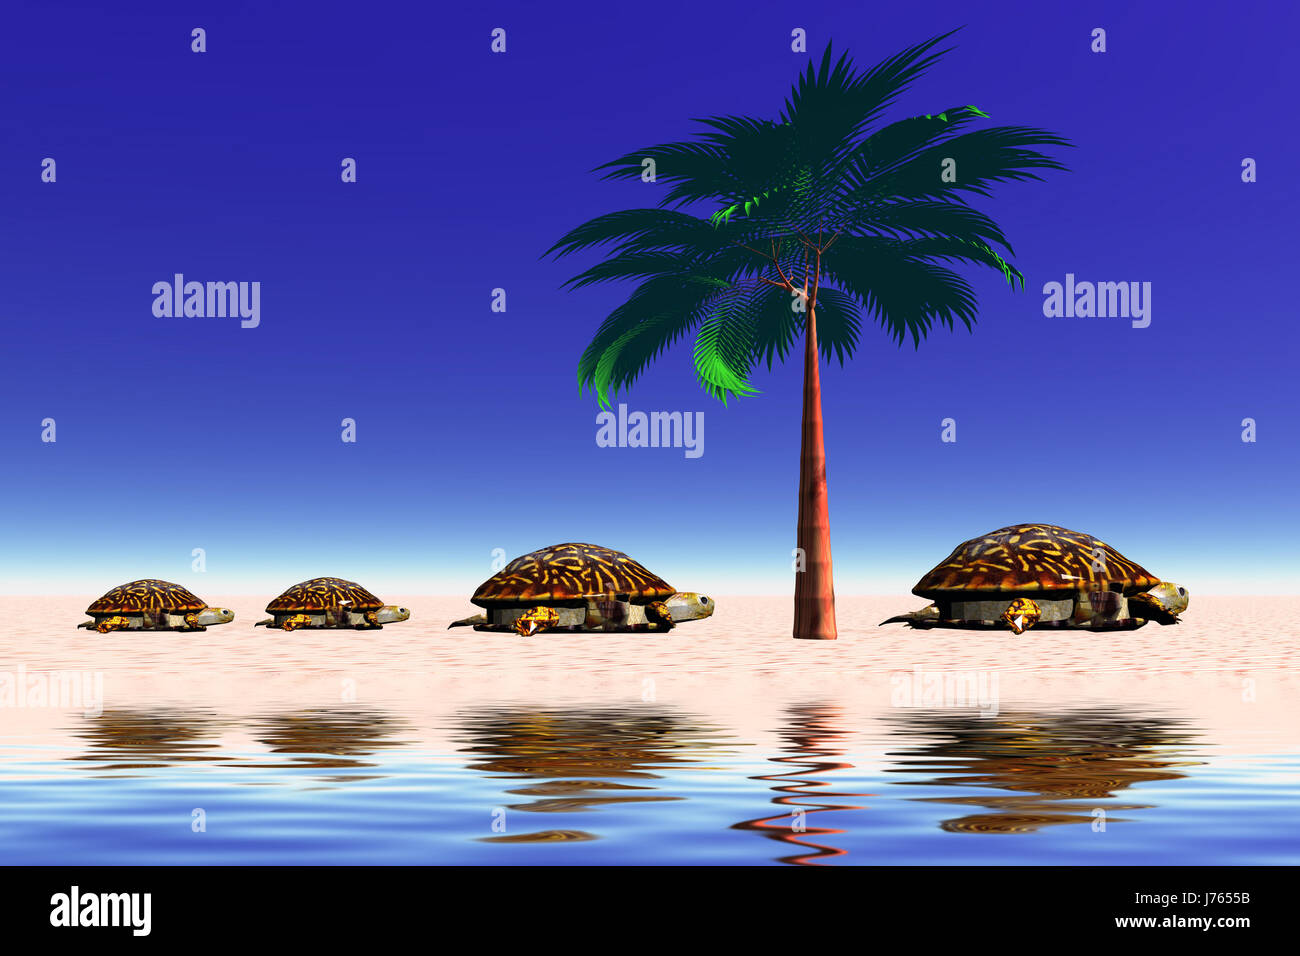 Spiaggia mare spiaggia spiaggia Palm tree rospi tartarughe isle isola turtle Foto Stock